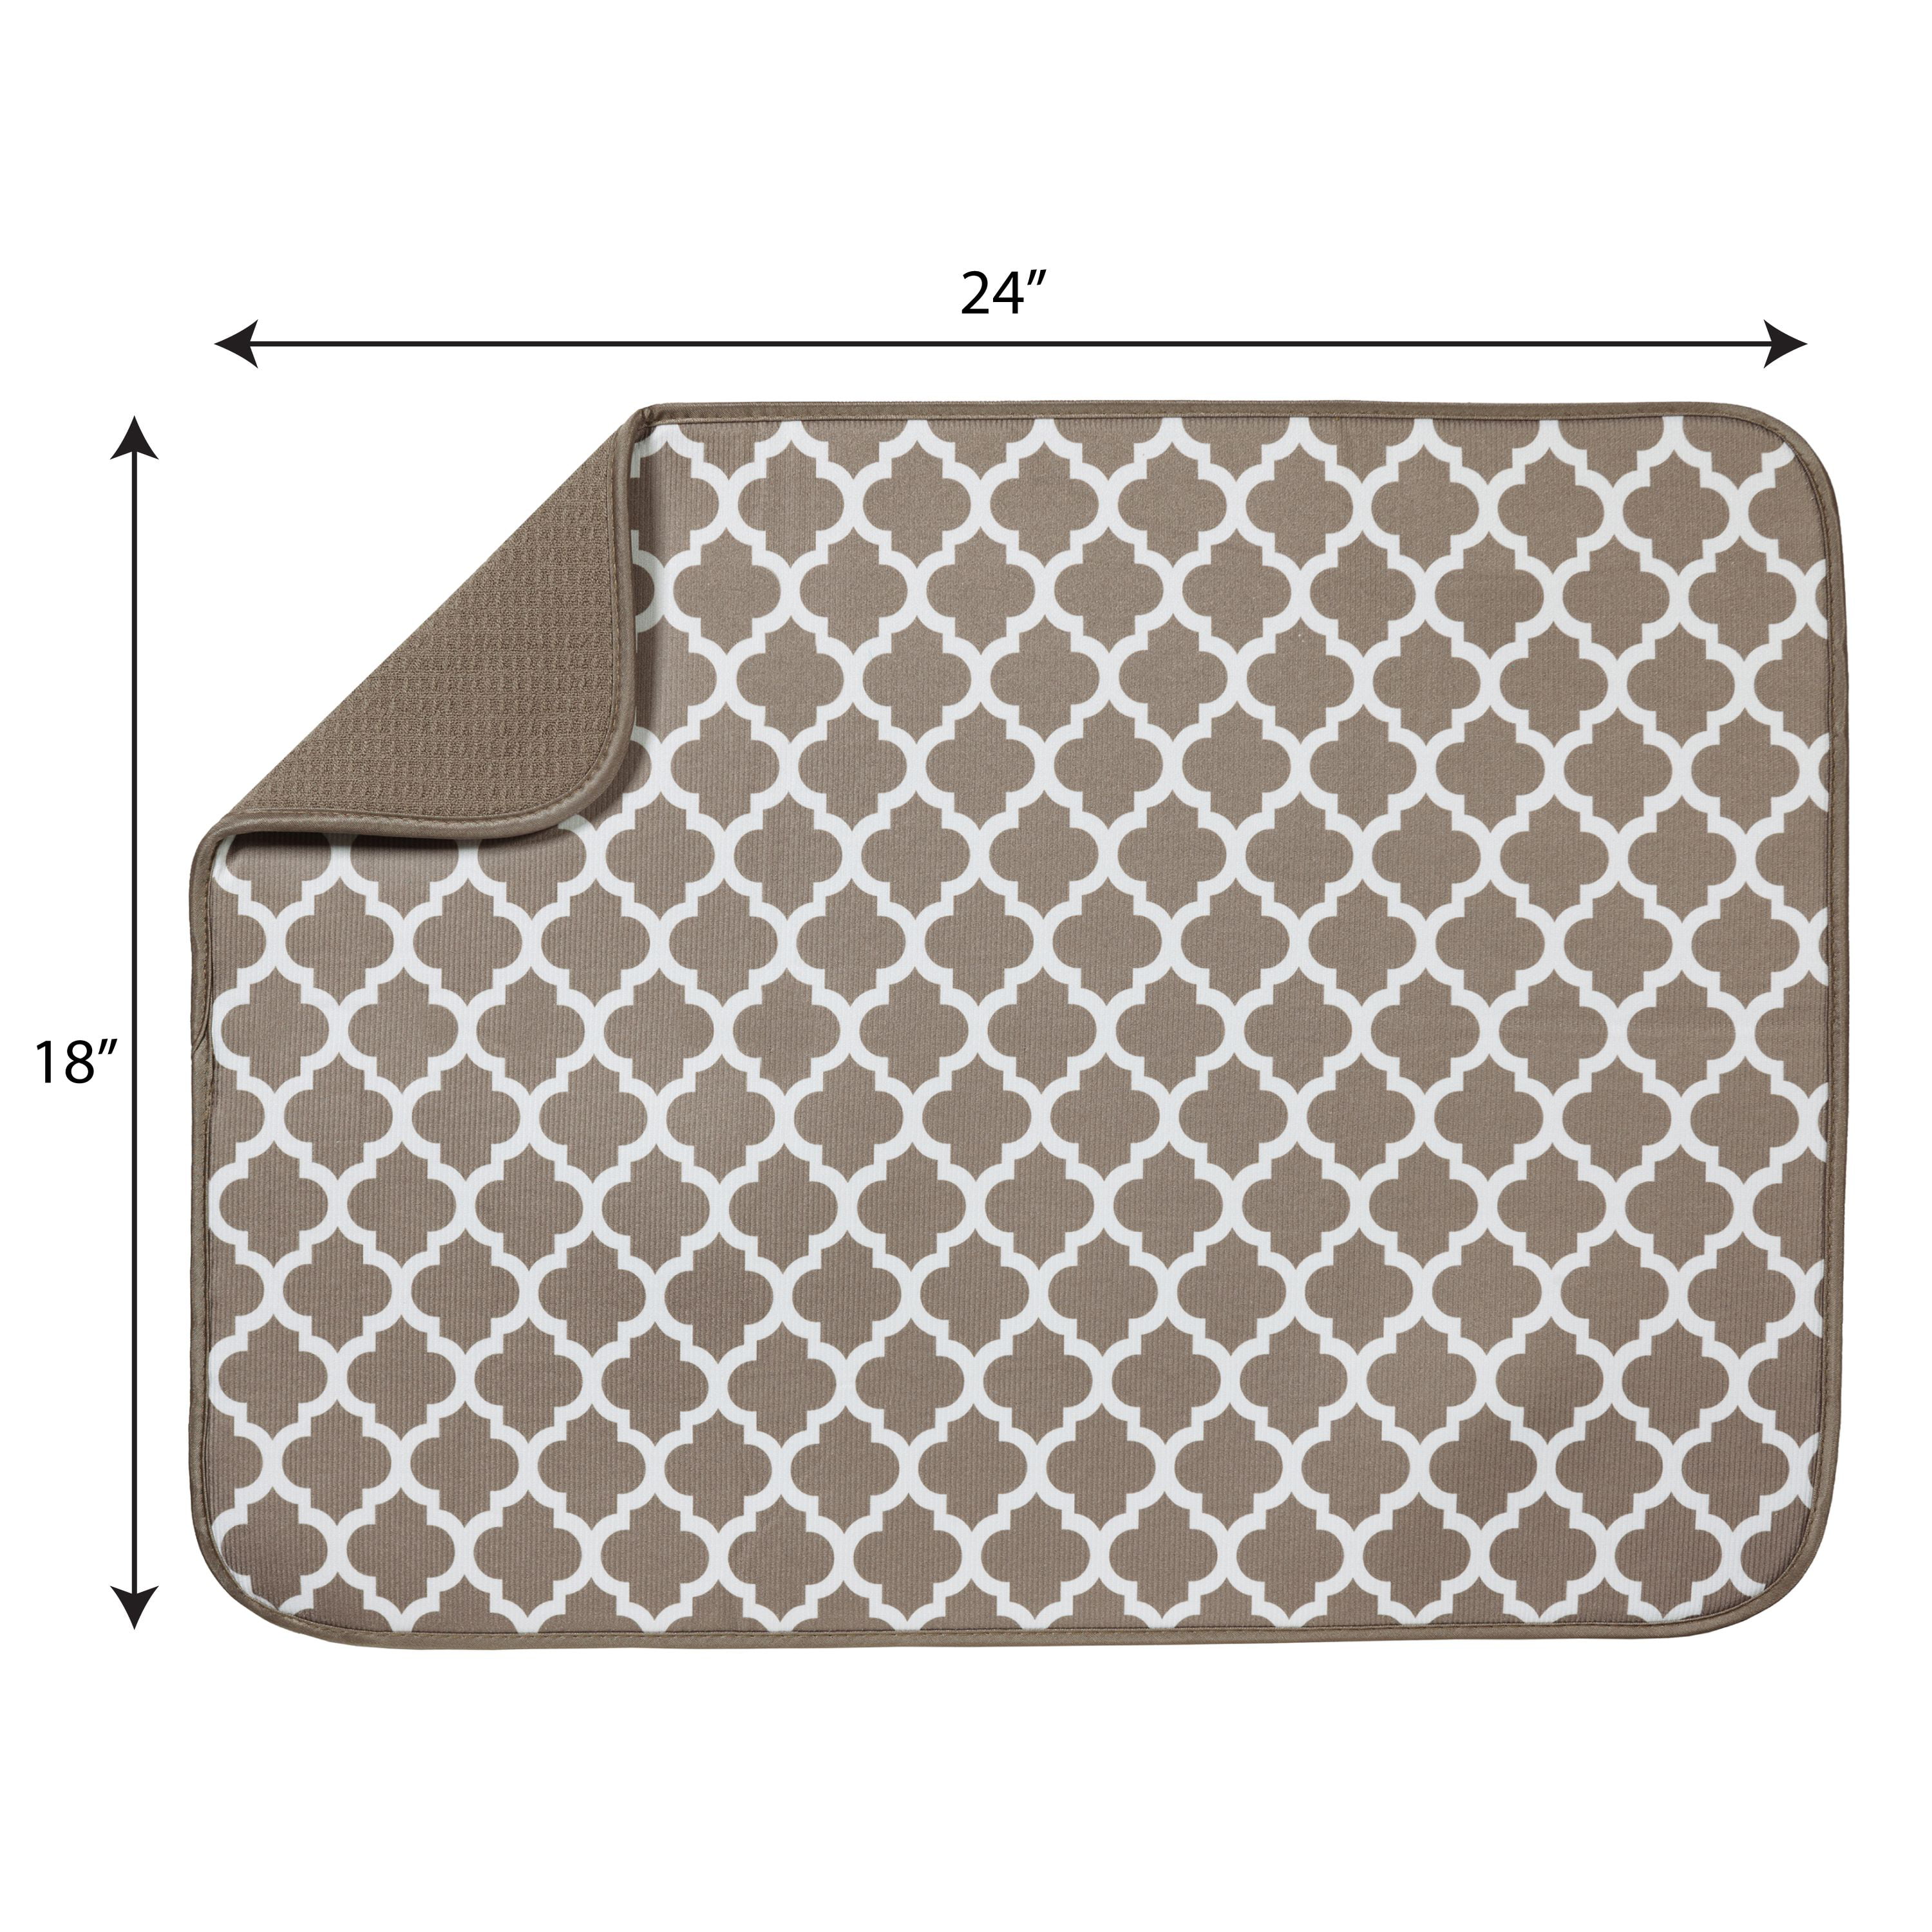 Labyrinth Dish Drying Mat – Sttelli